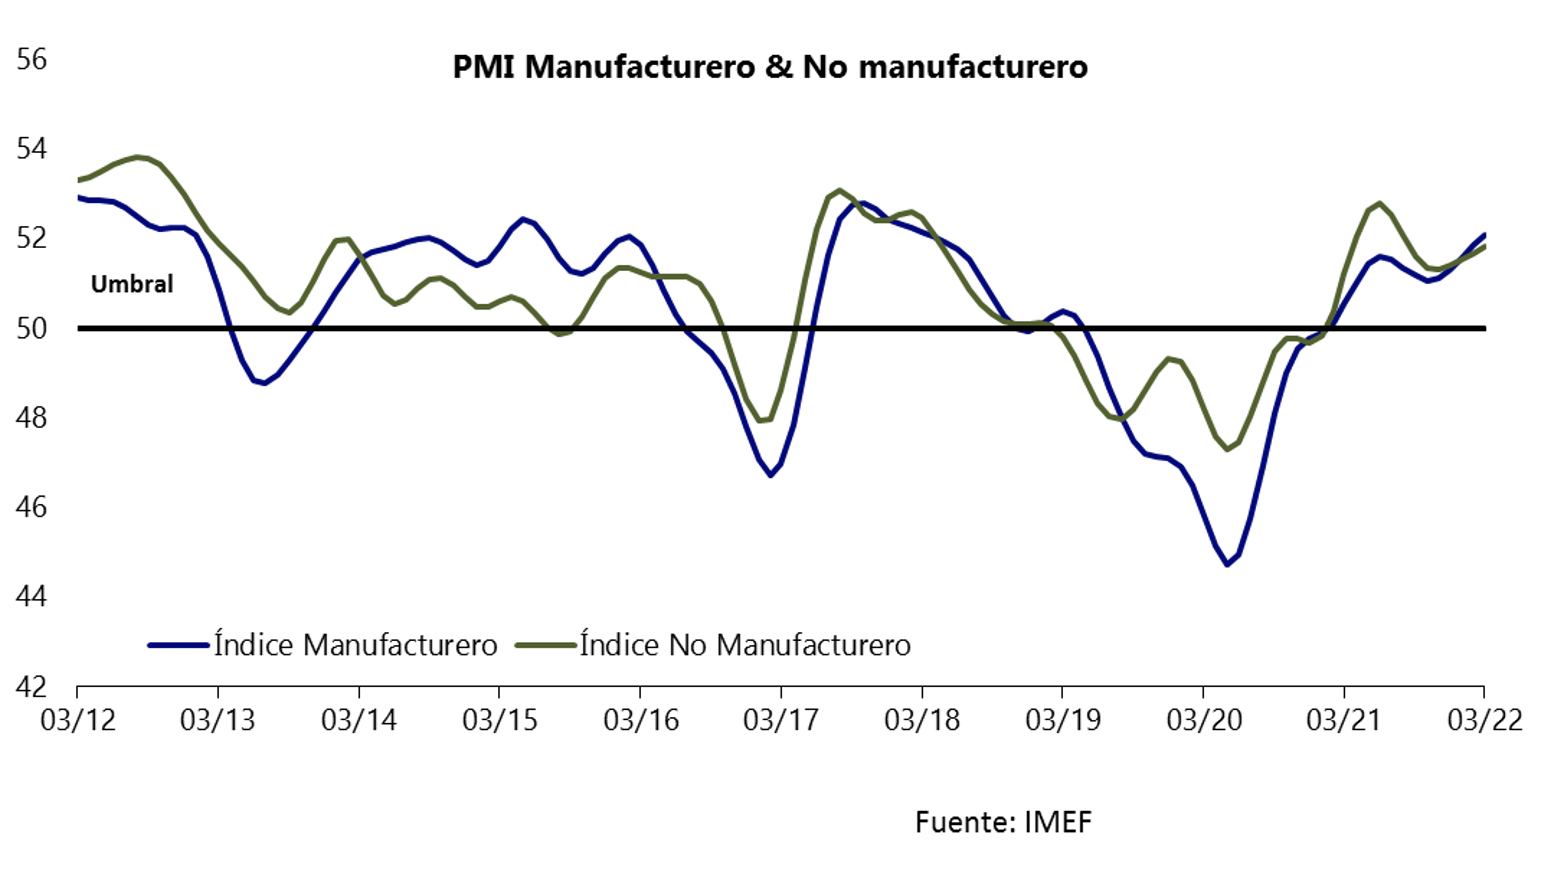 "PMI Manufacturero y No Manufacturero"